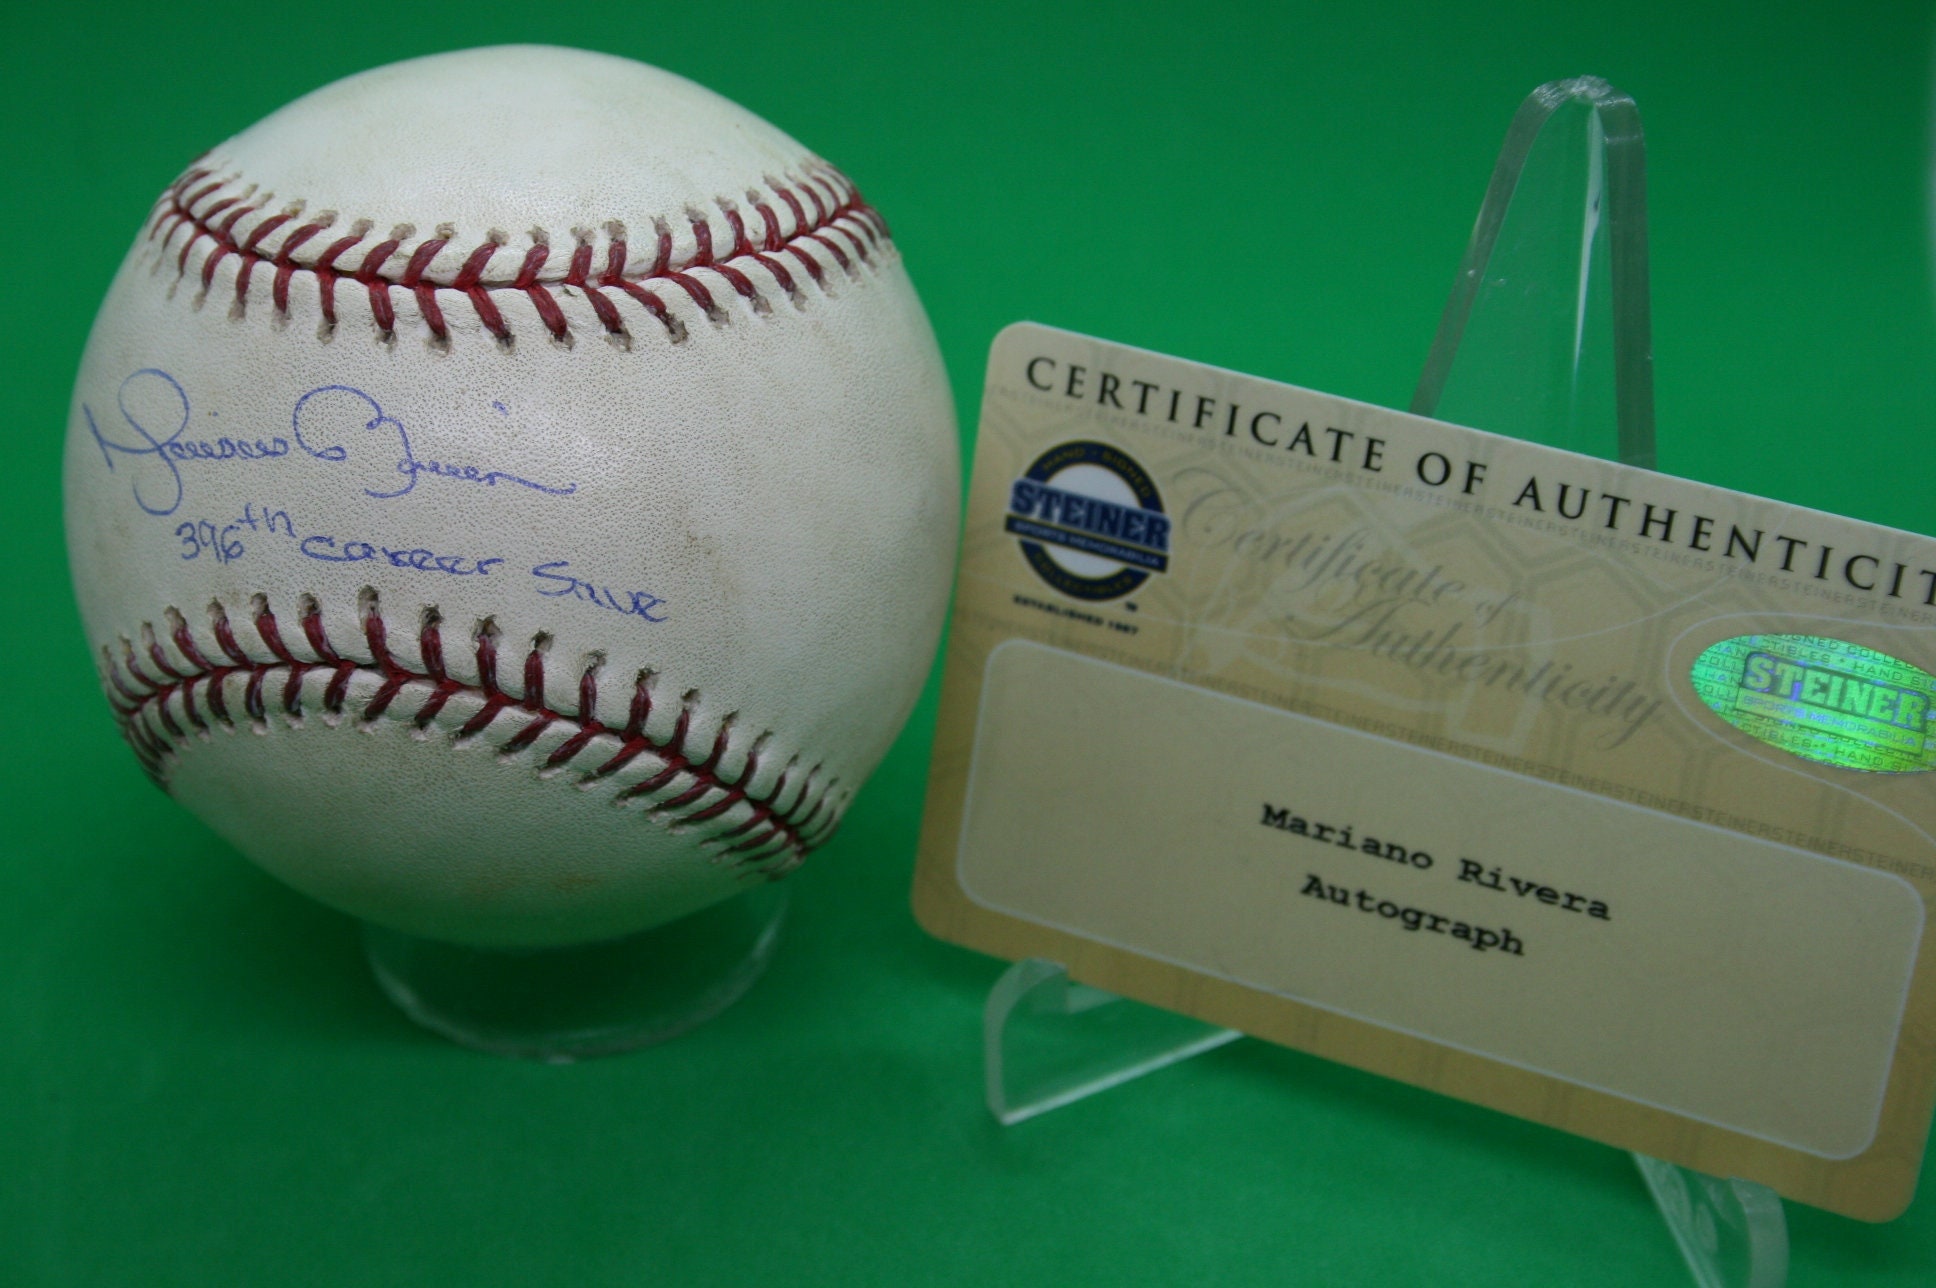 Mariano Rivera game Used Baseball W/inscription 